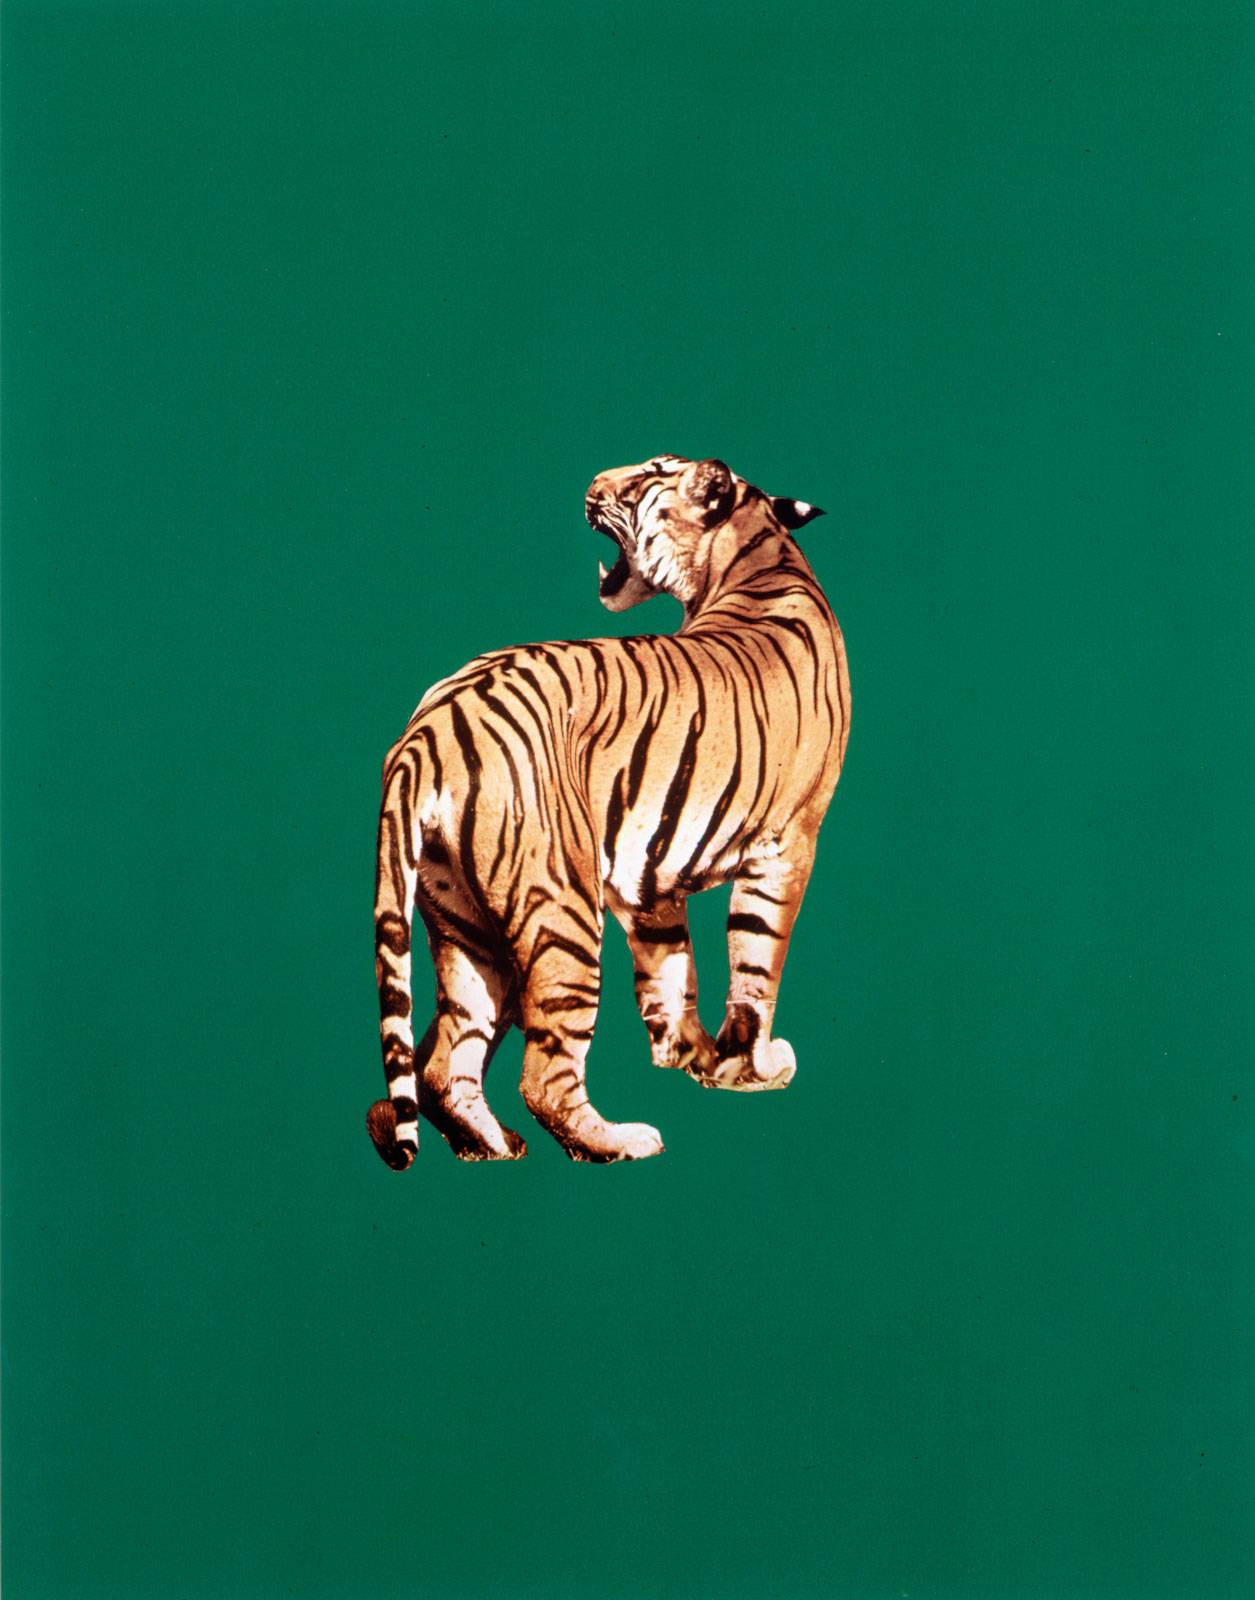 Sarah Charlesworth, Tiger, 1985. Courtesy Estate of Sarah Charlesworth and the Maccarone Gallery